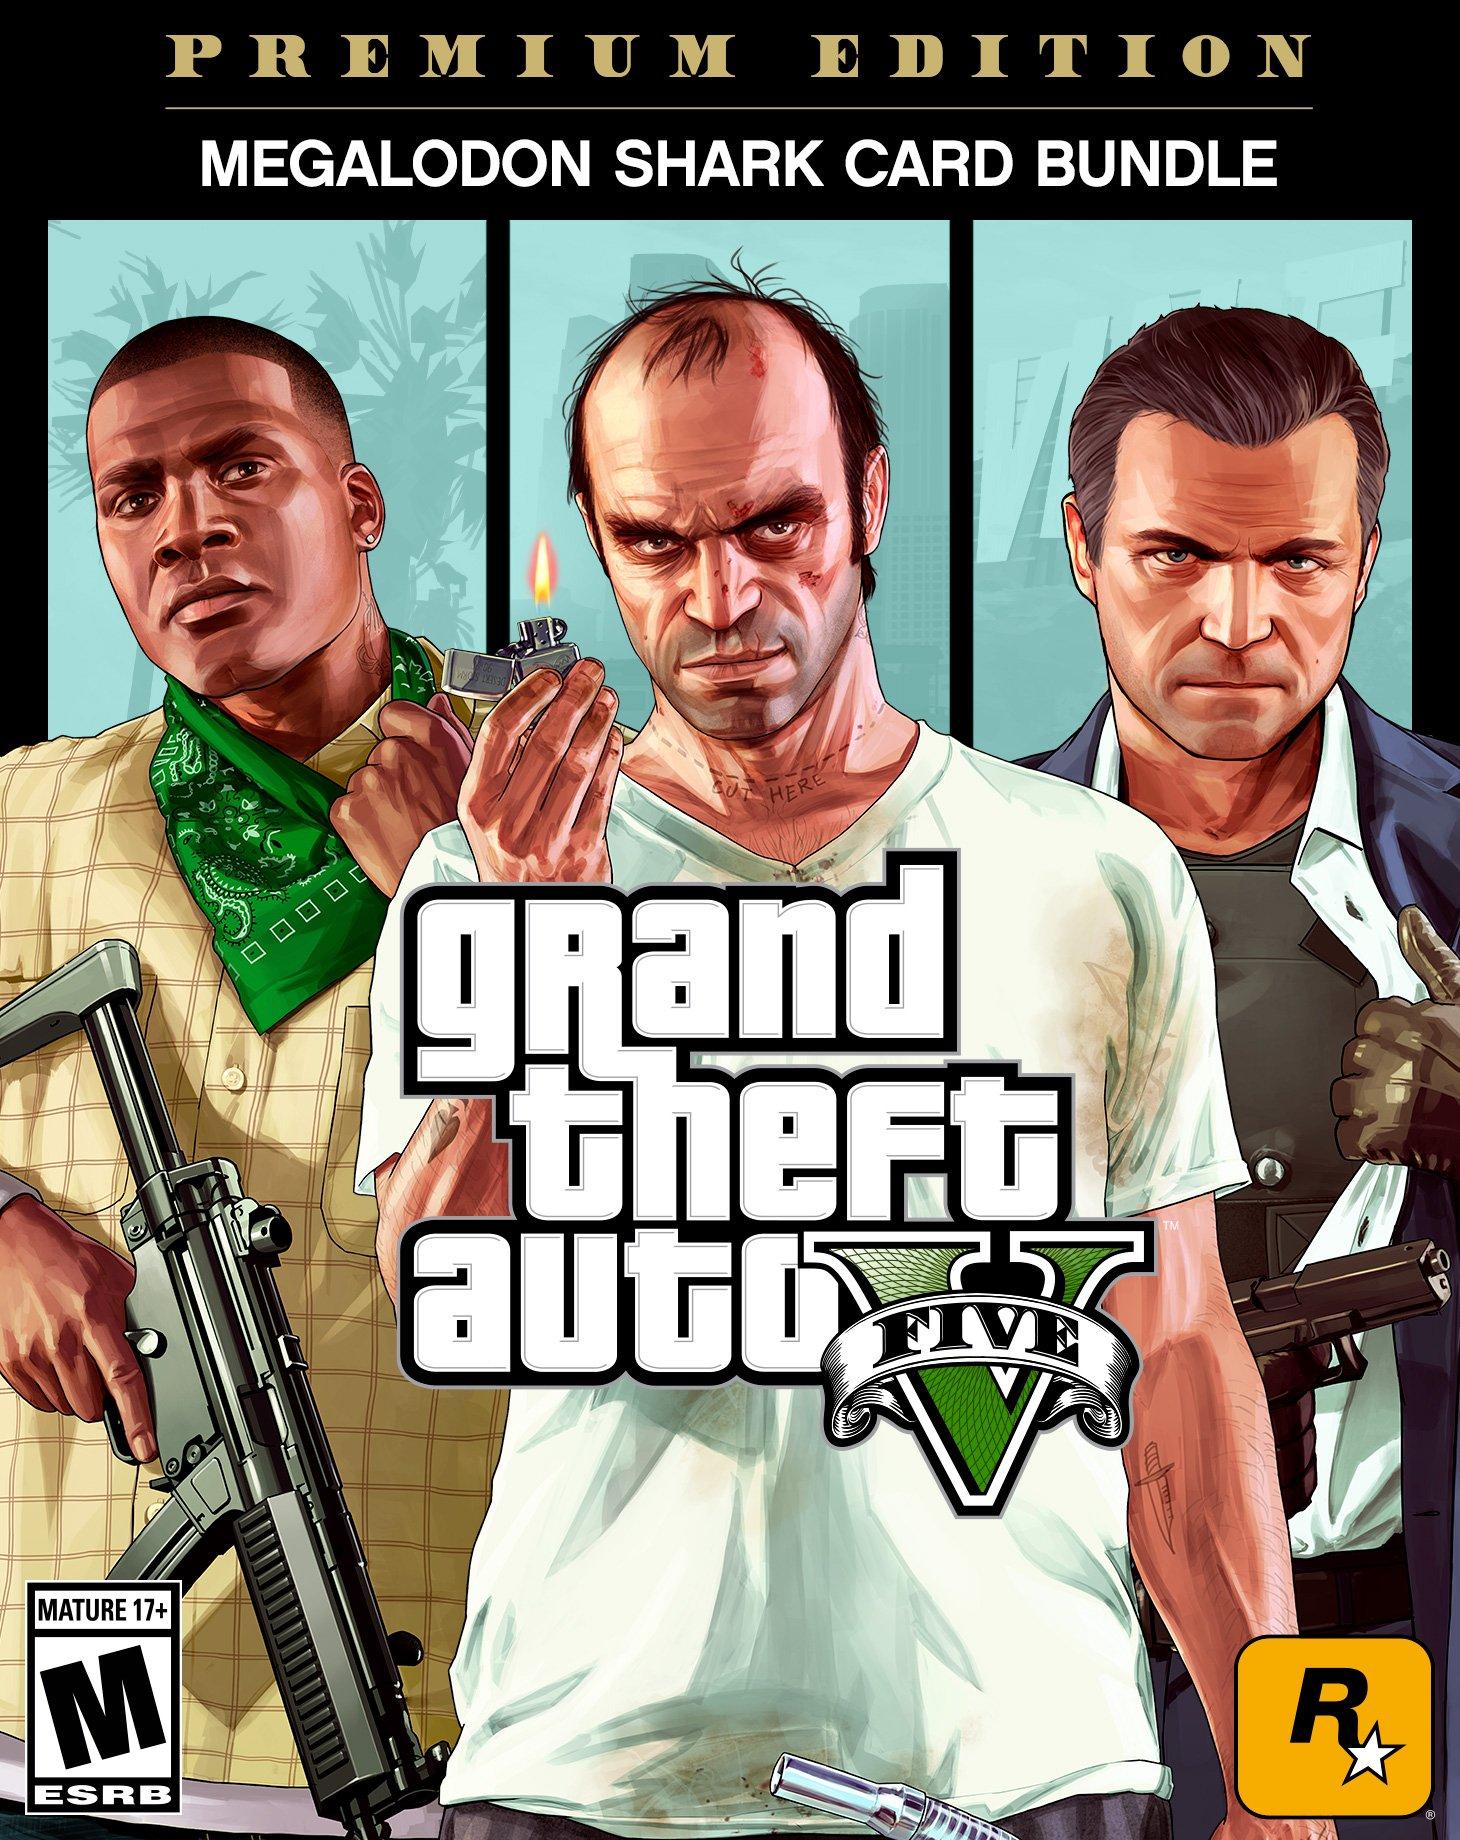 Grand Theft Auto V: Premium and Megalodon Shark Card Bundle | GameStop